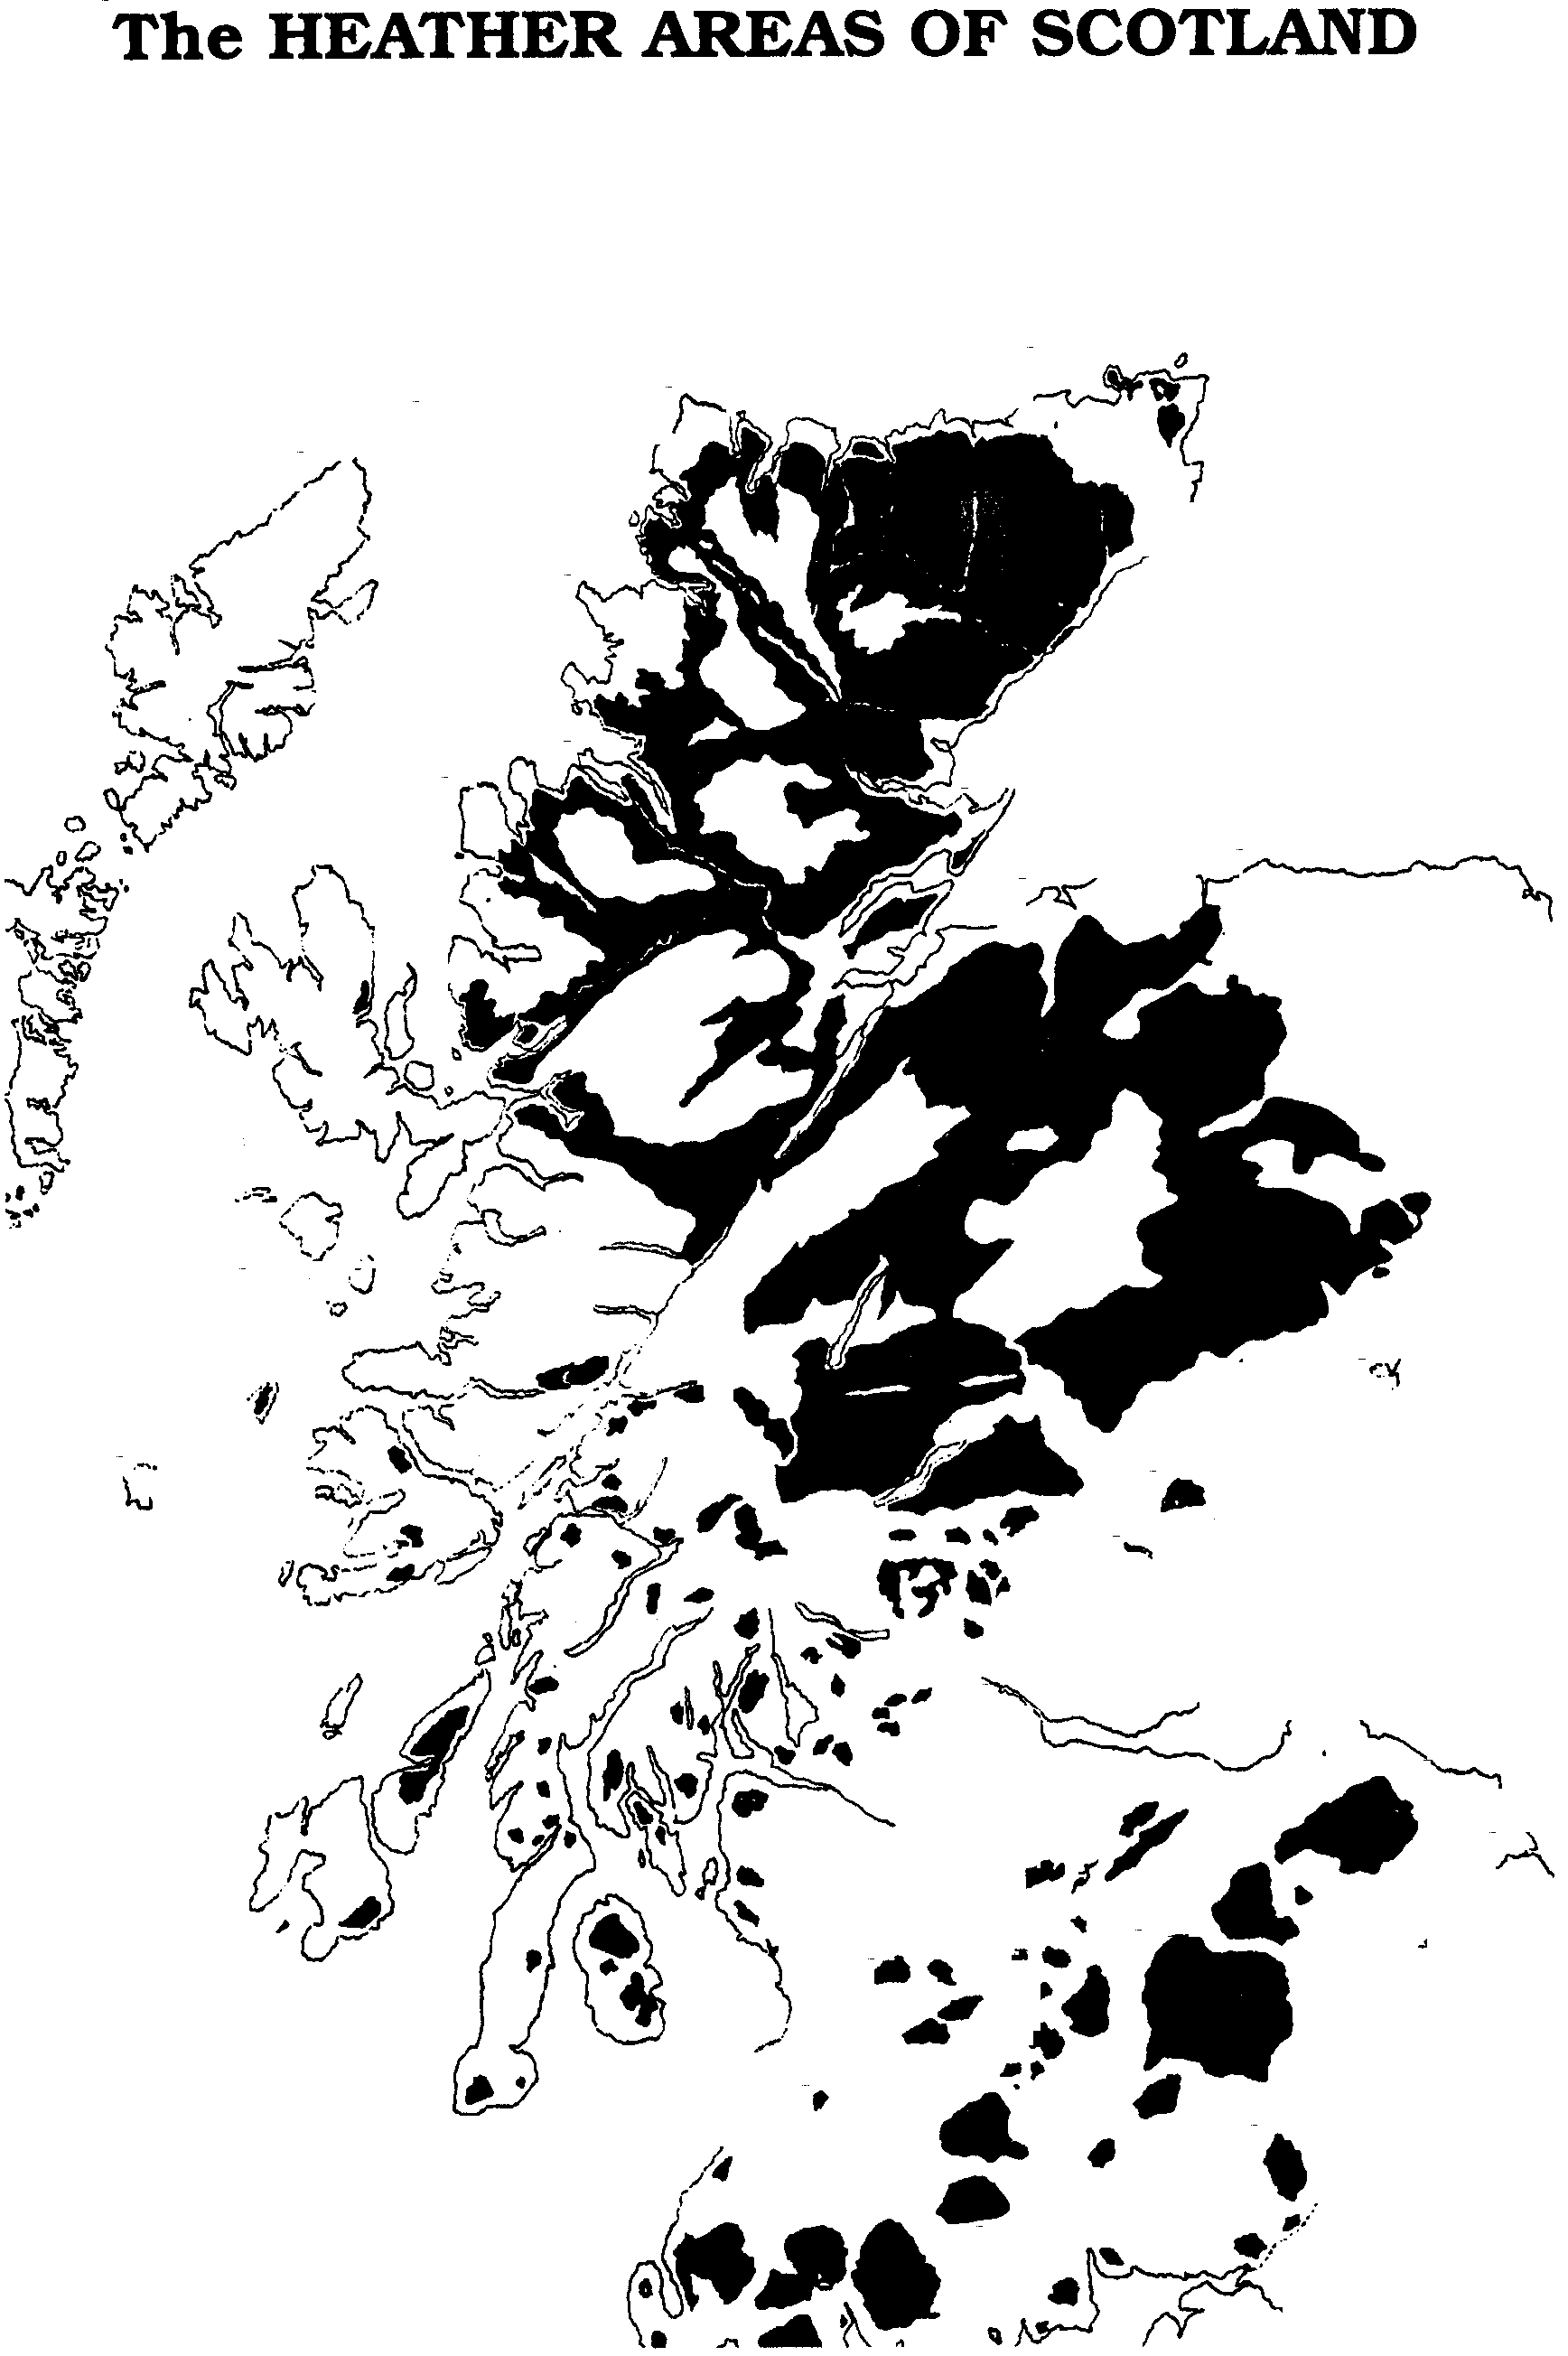 The Heather Areas of Scotland